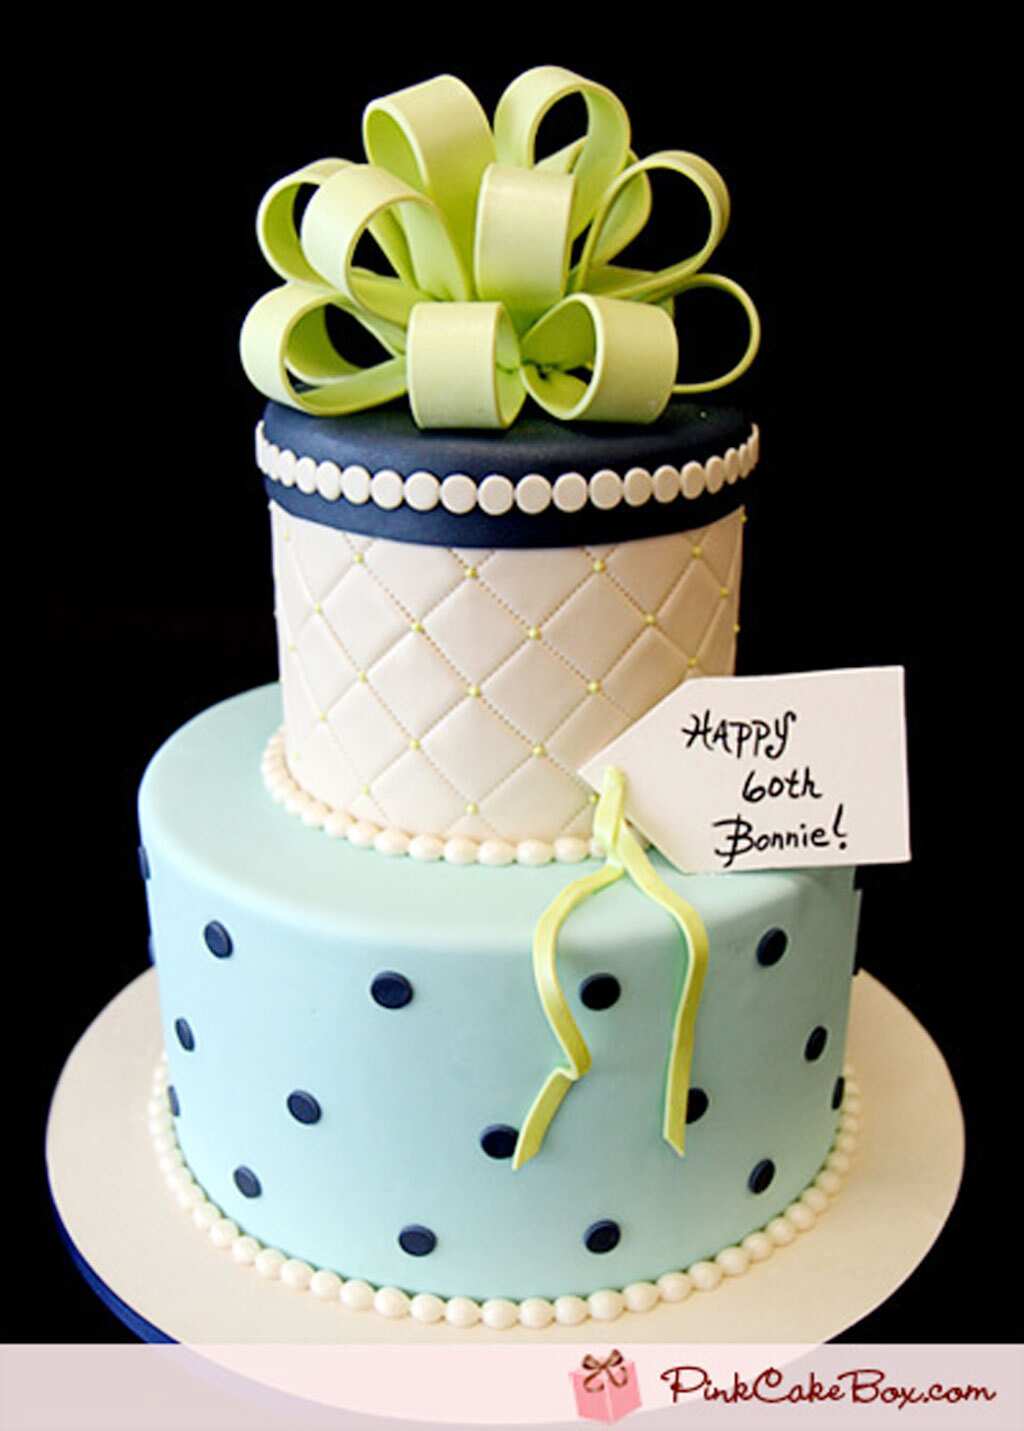 Birthday Cake Designs To Show Your Love Nigeriasummary News